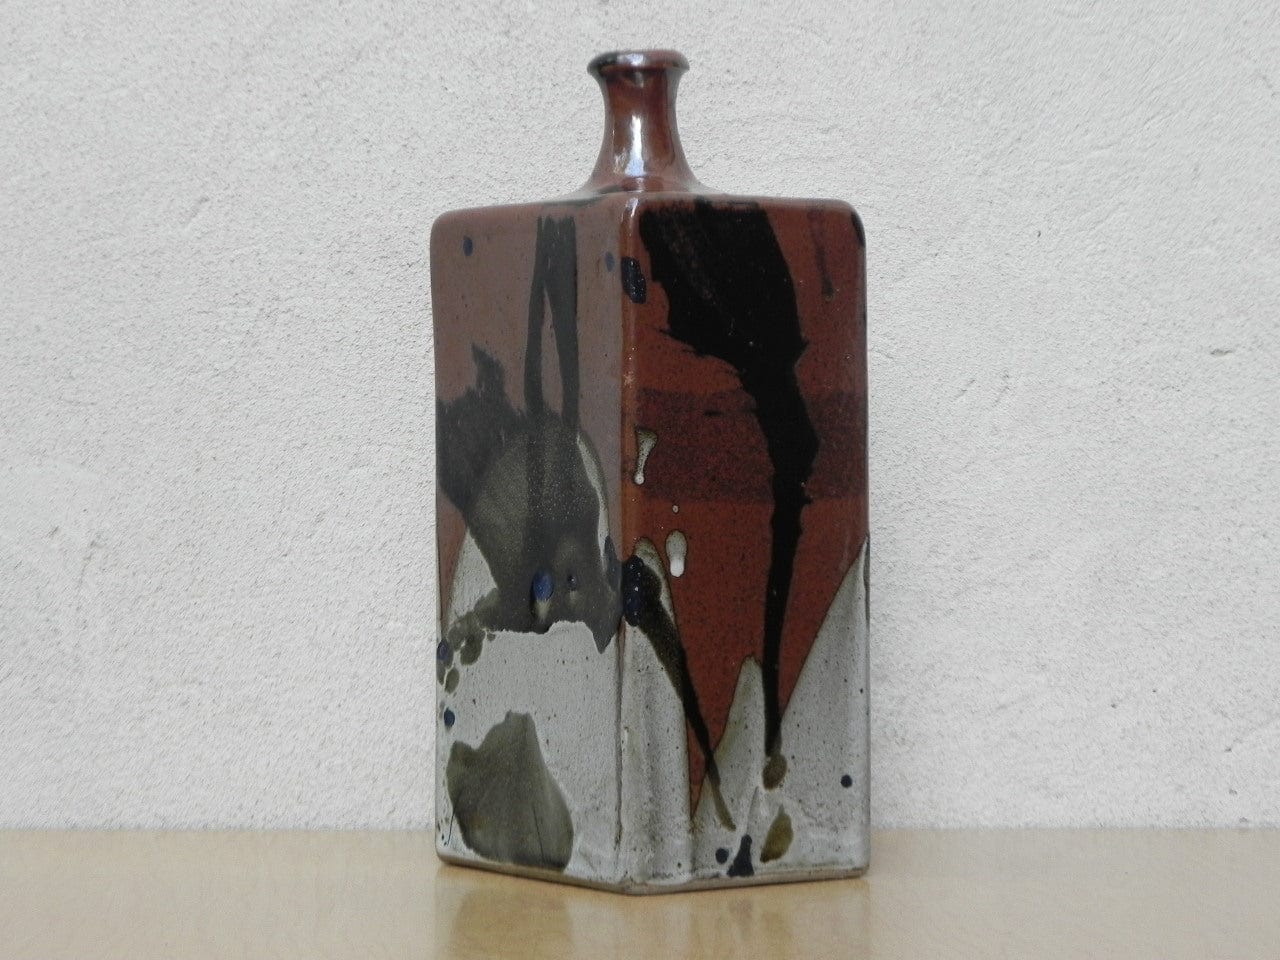 I Like Mike's Mid Century Modern Wall Decor & Art Mid Century Modern Rectangle Ceramic Vase by Frank Salzman